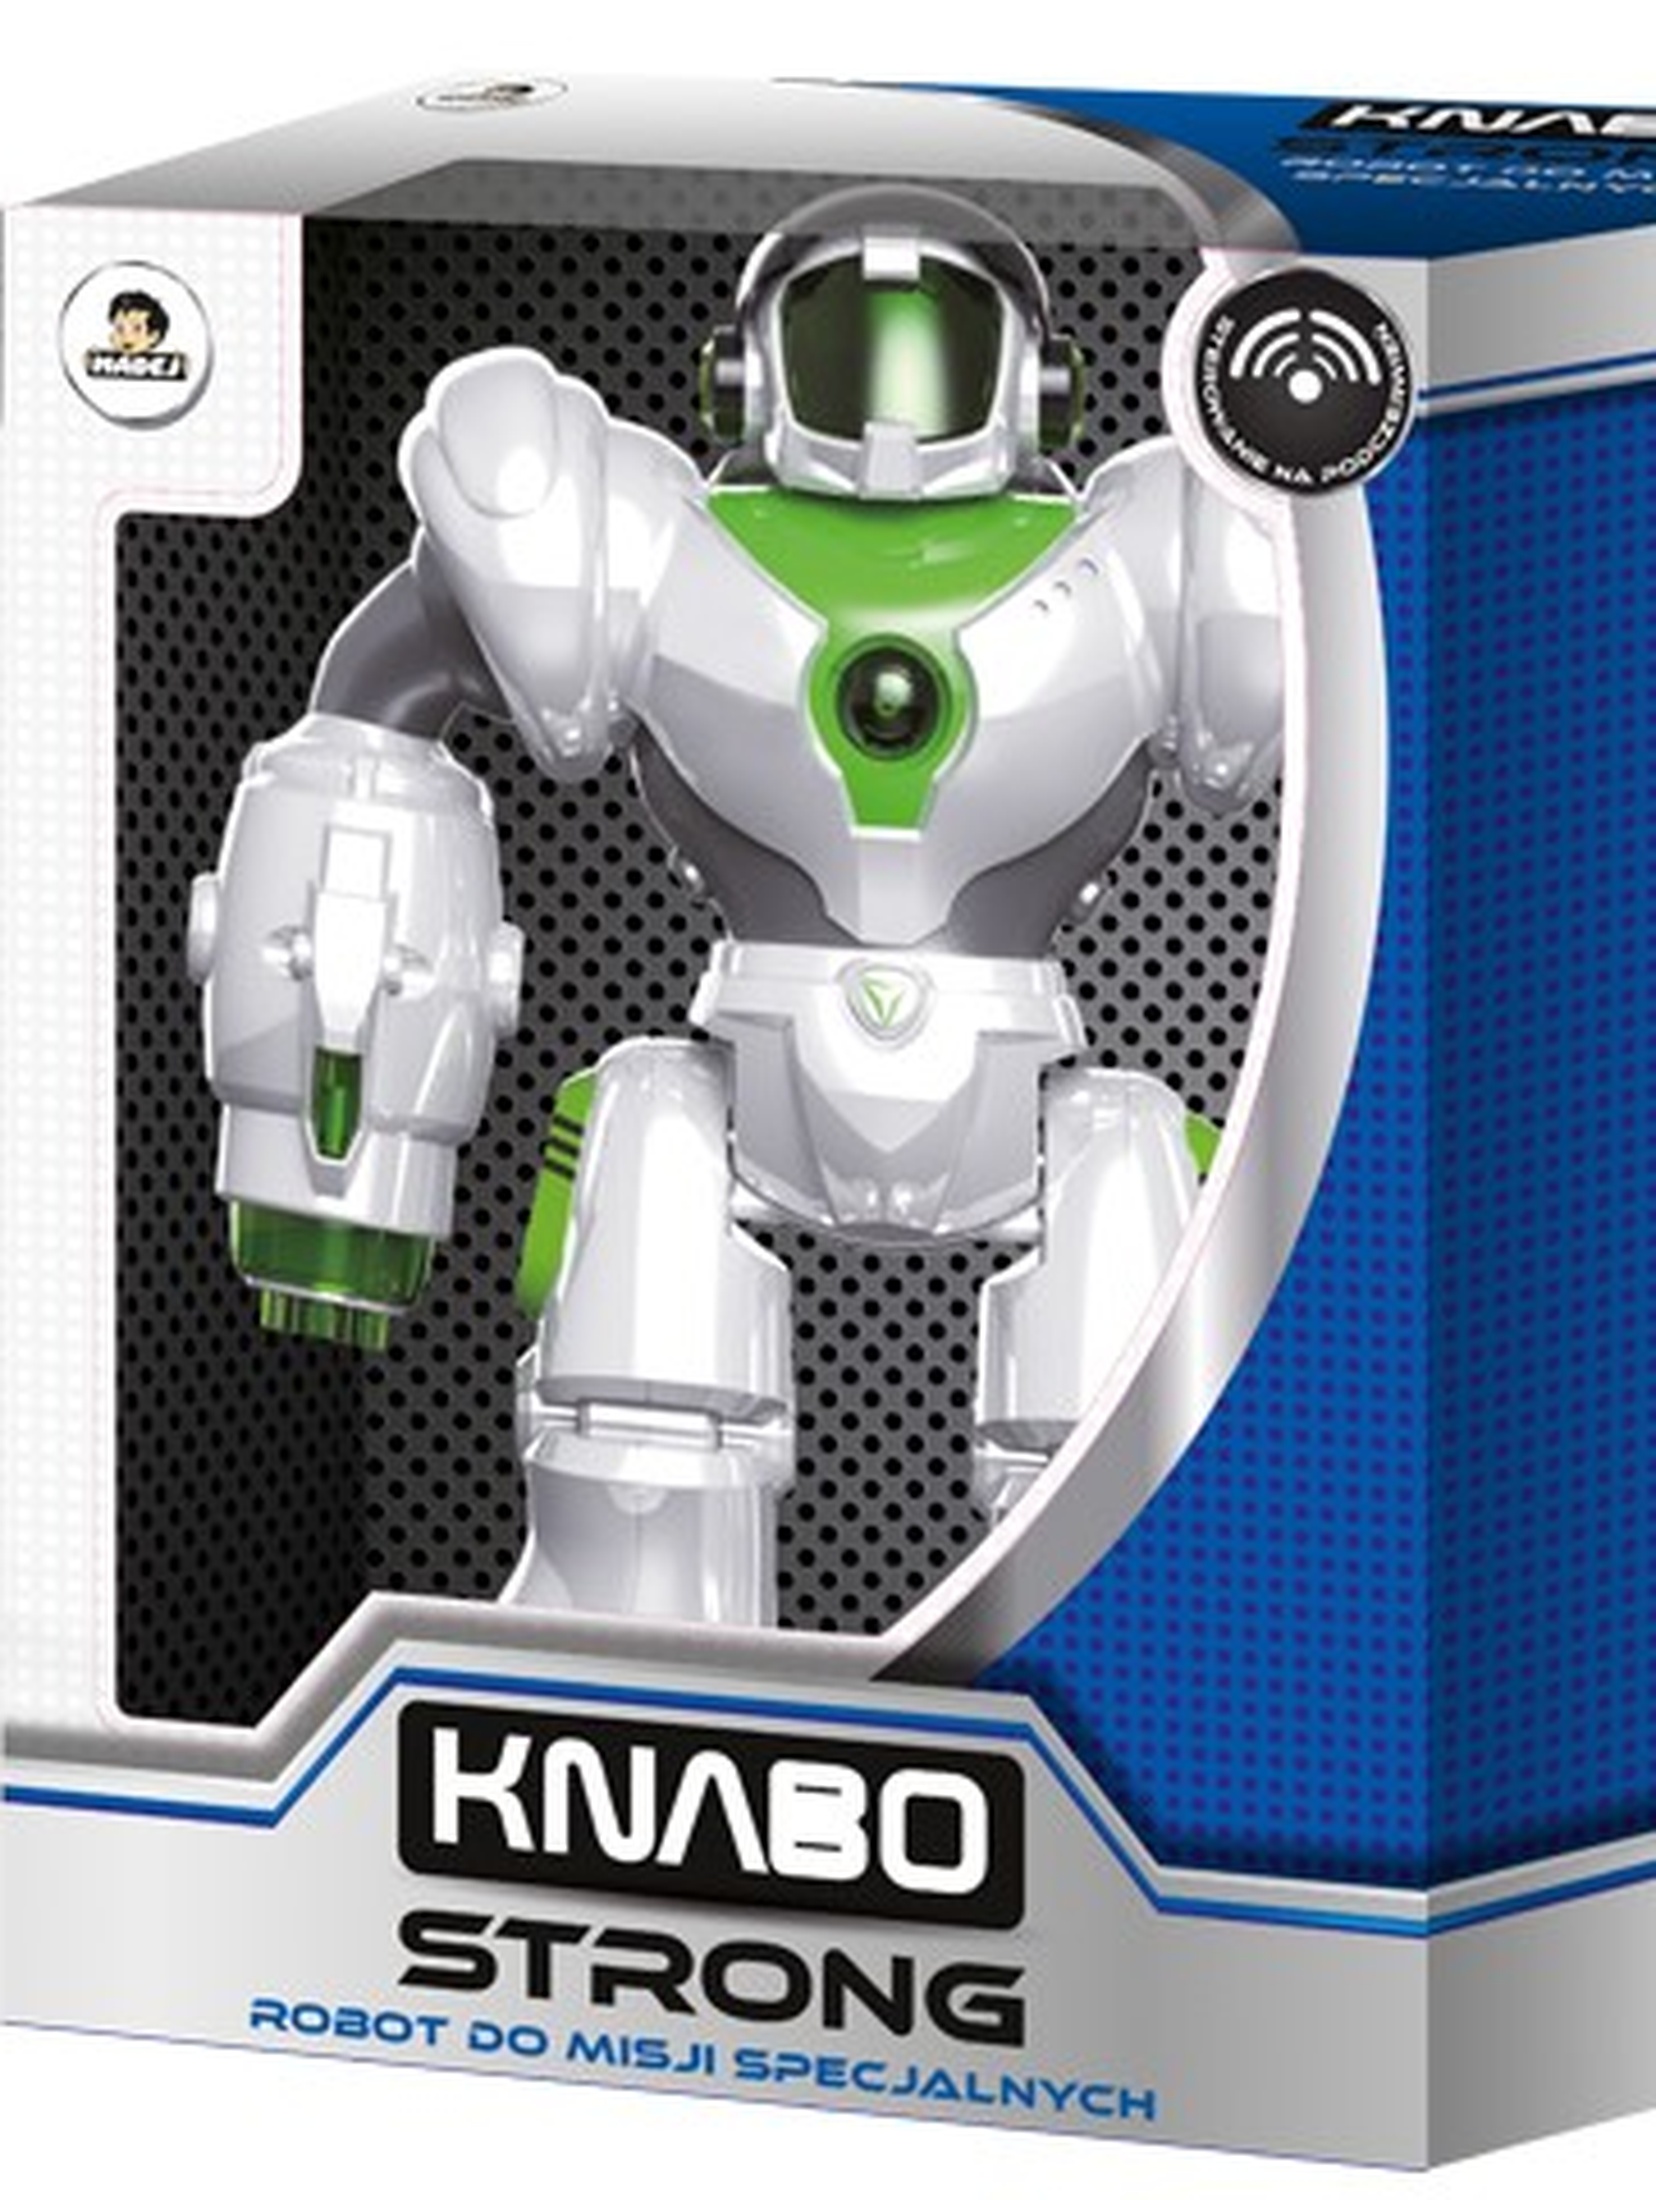 Robot Knabo Wojownik